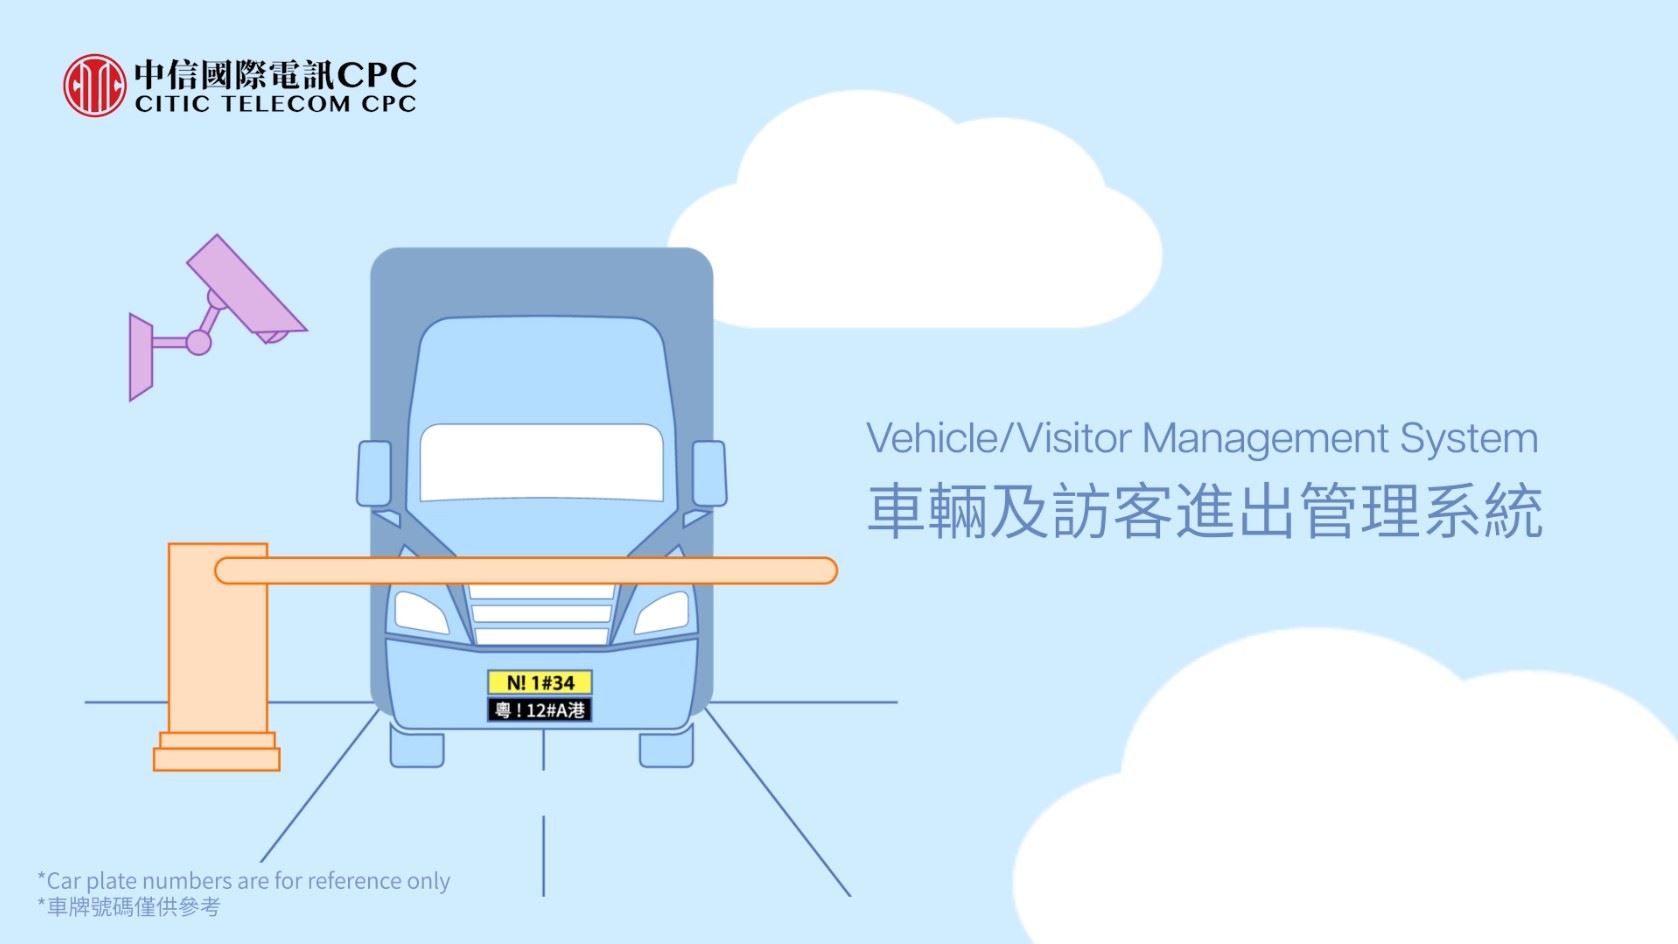 Vehicle/Visitor Management System